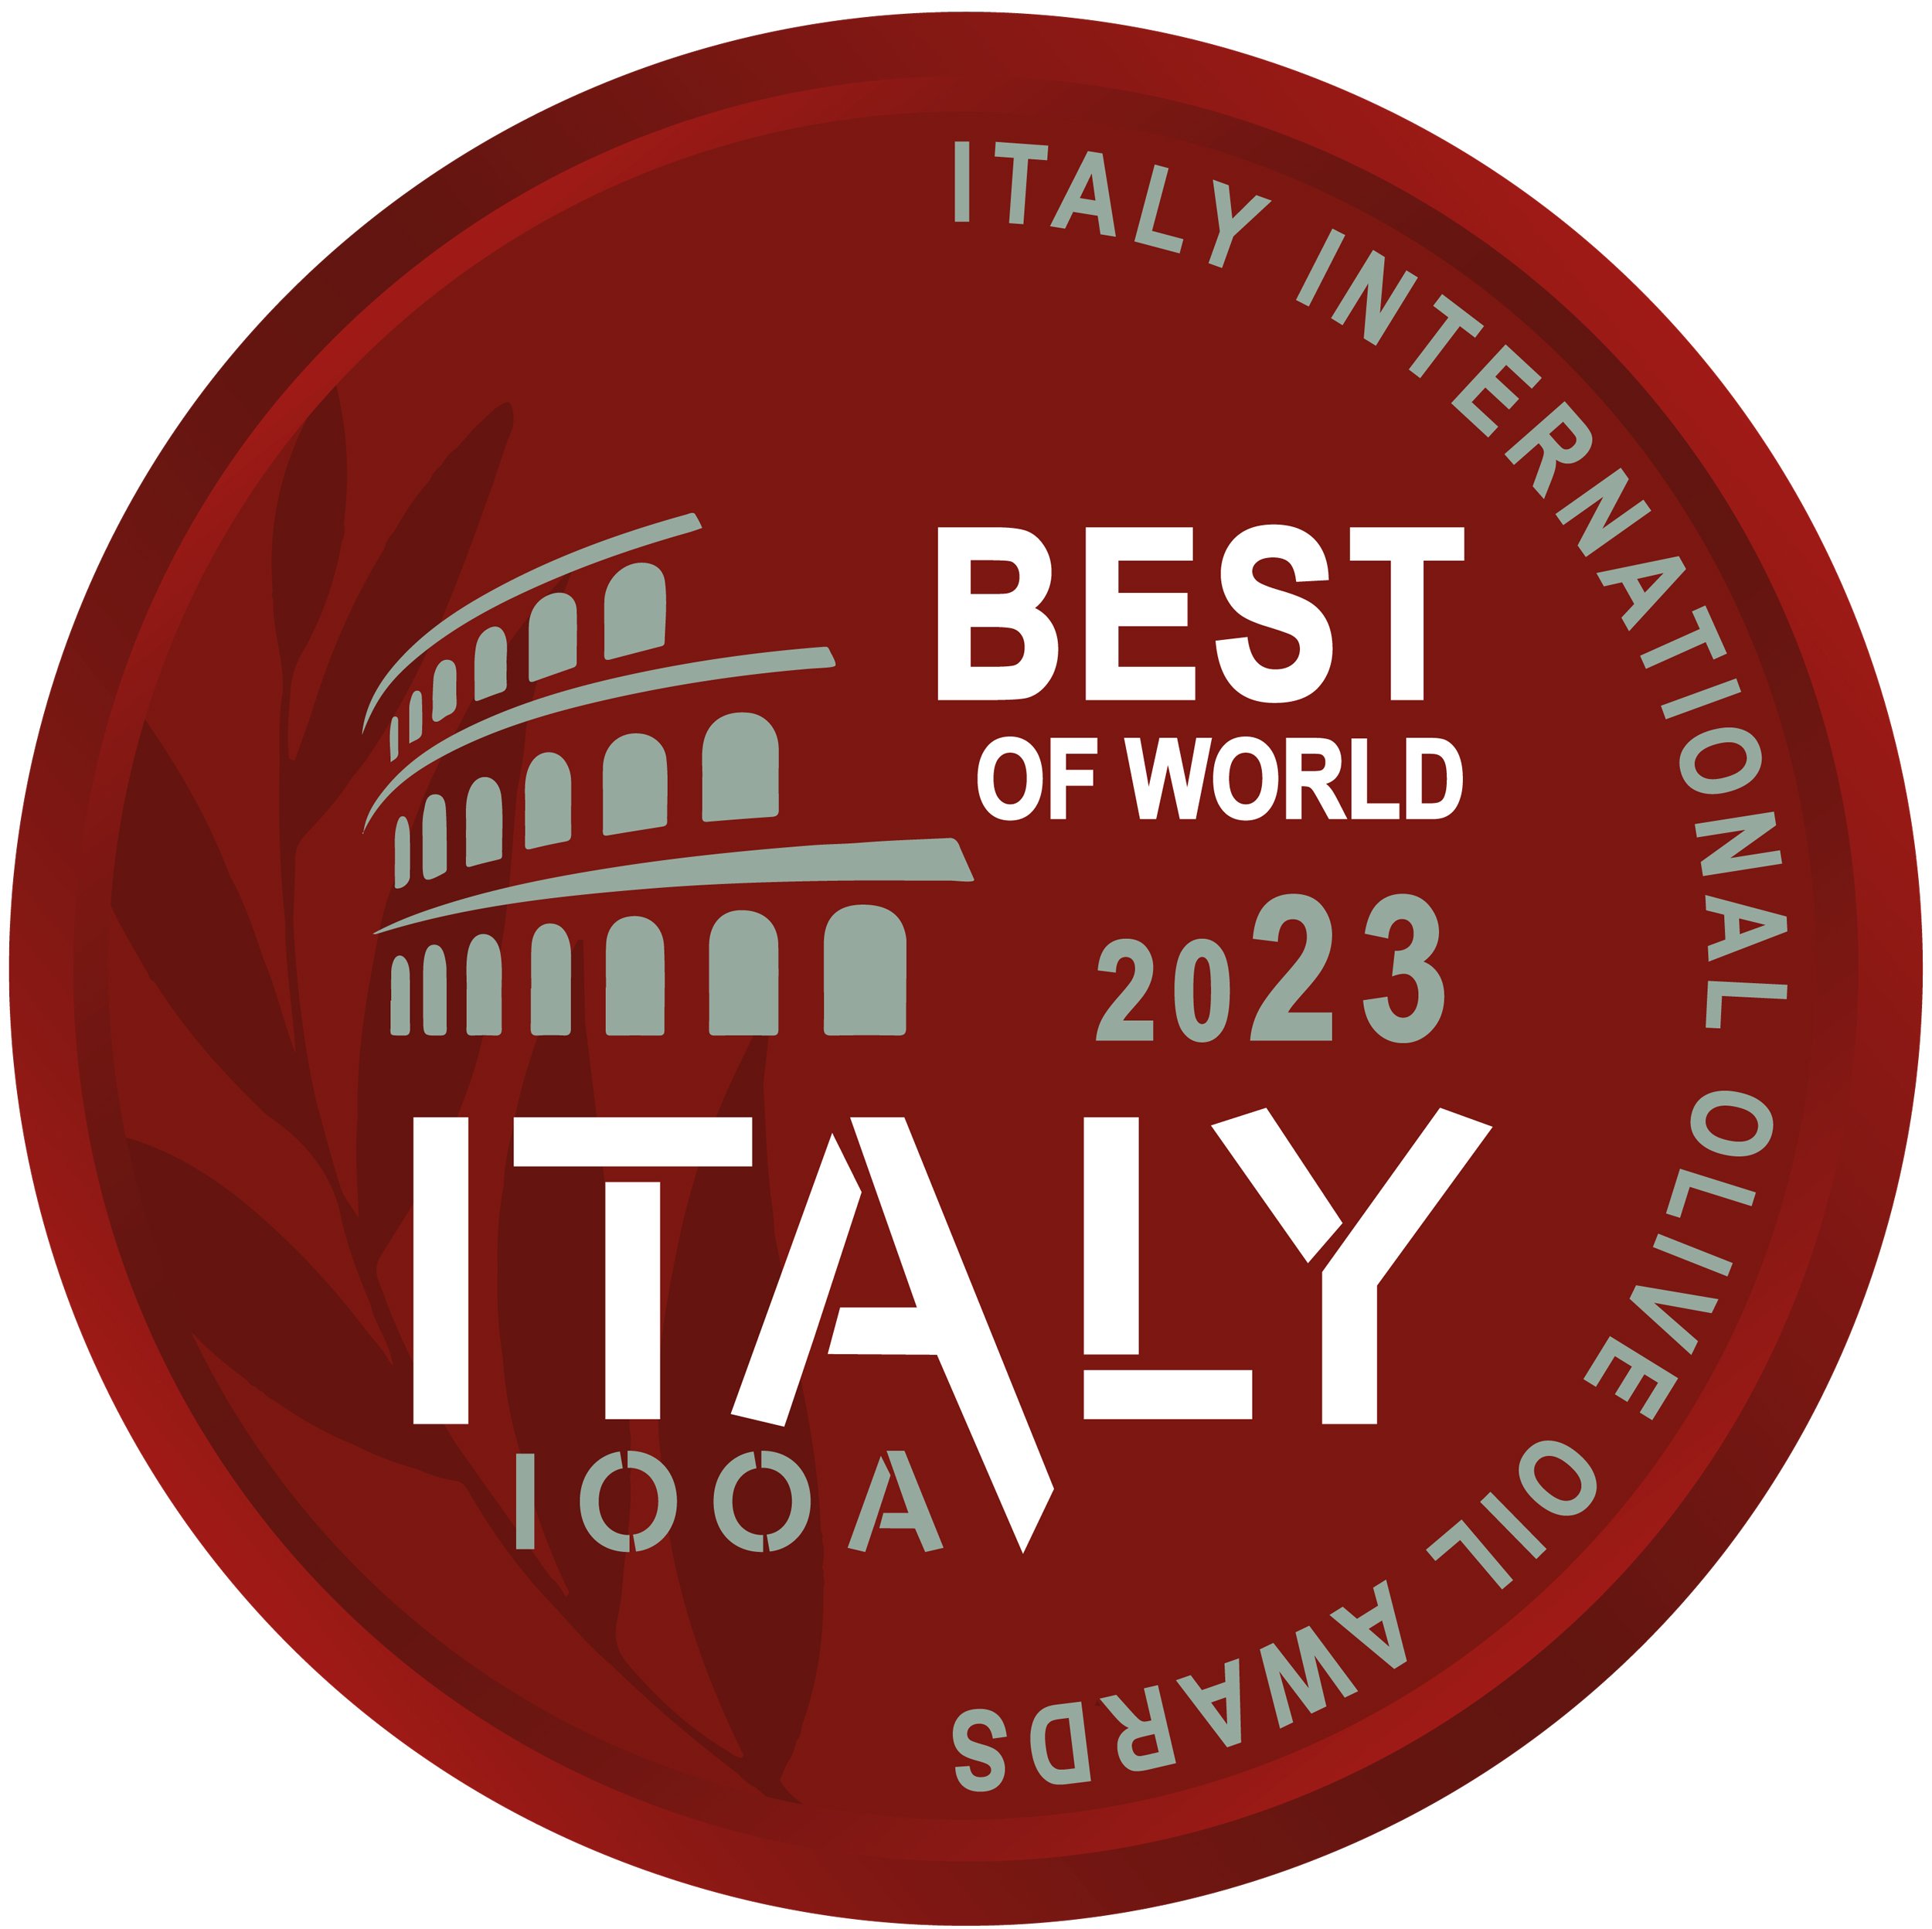 Melhor do mundo - Italy IOOA